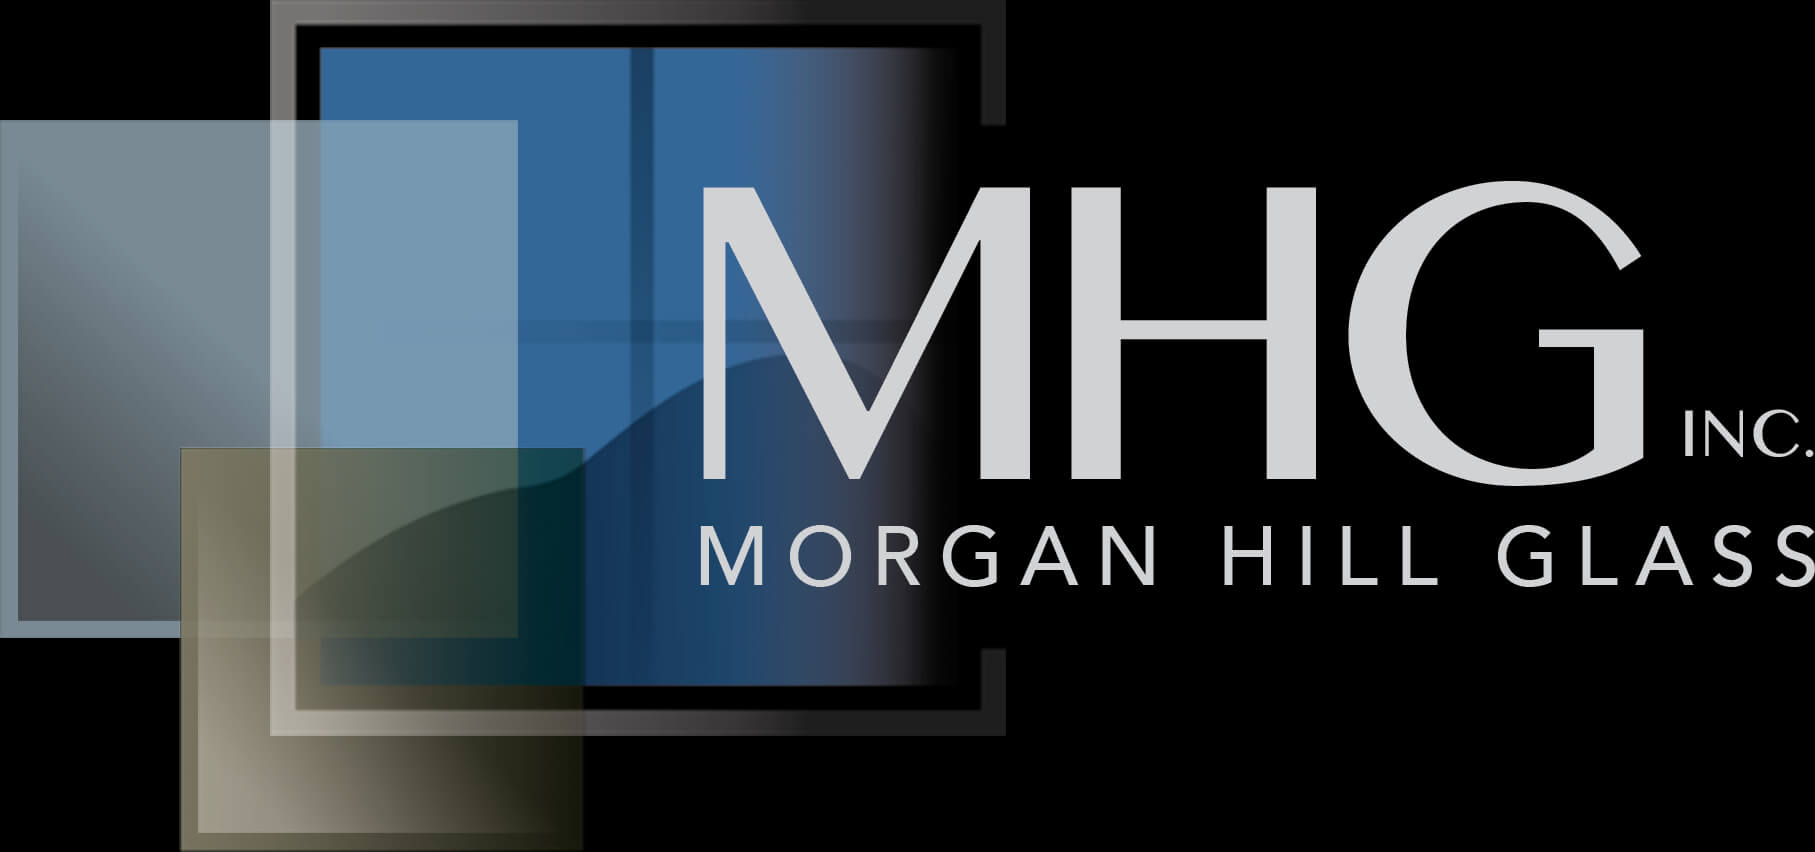 Morgan Hill Glass